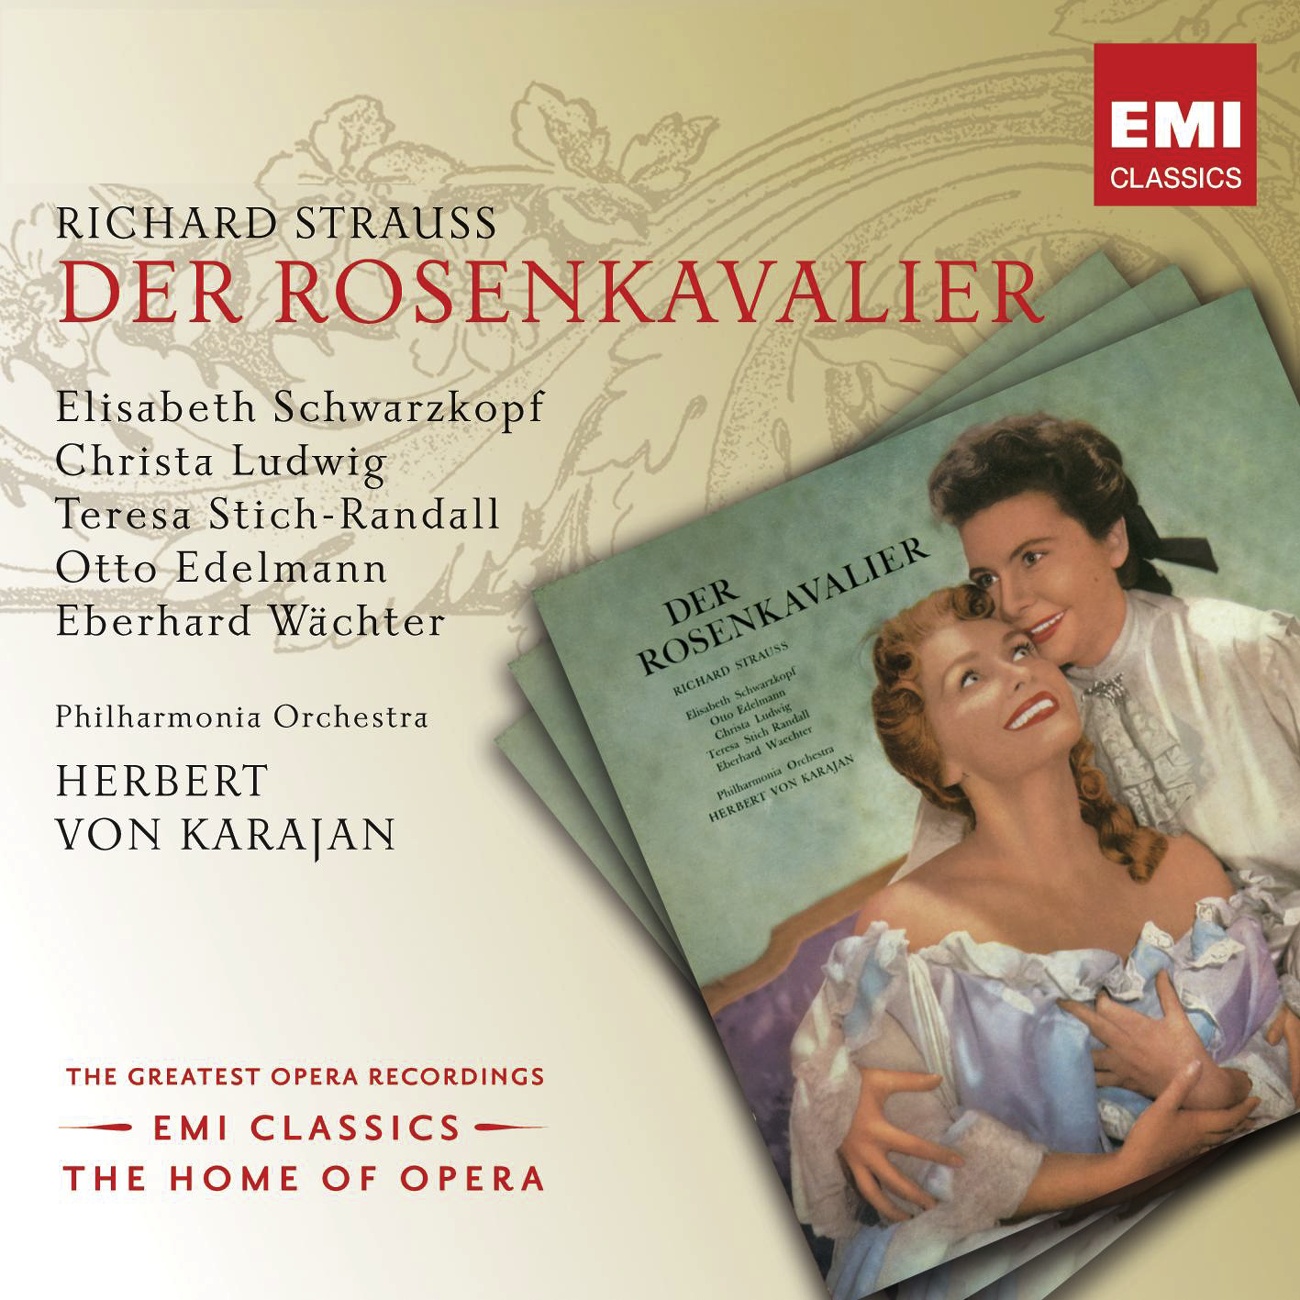 Der Rosenkavalier (2001 Digital Remaster), Act III: Pantomime (Orchestra)